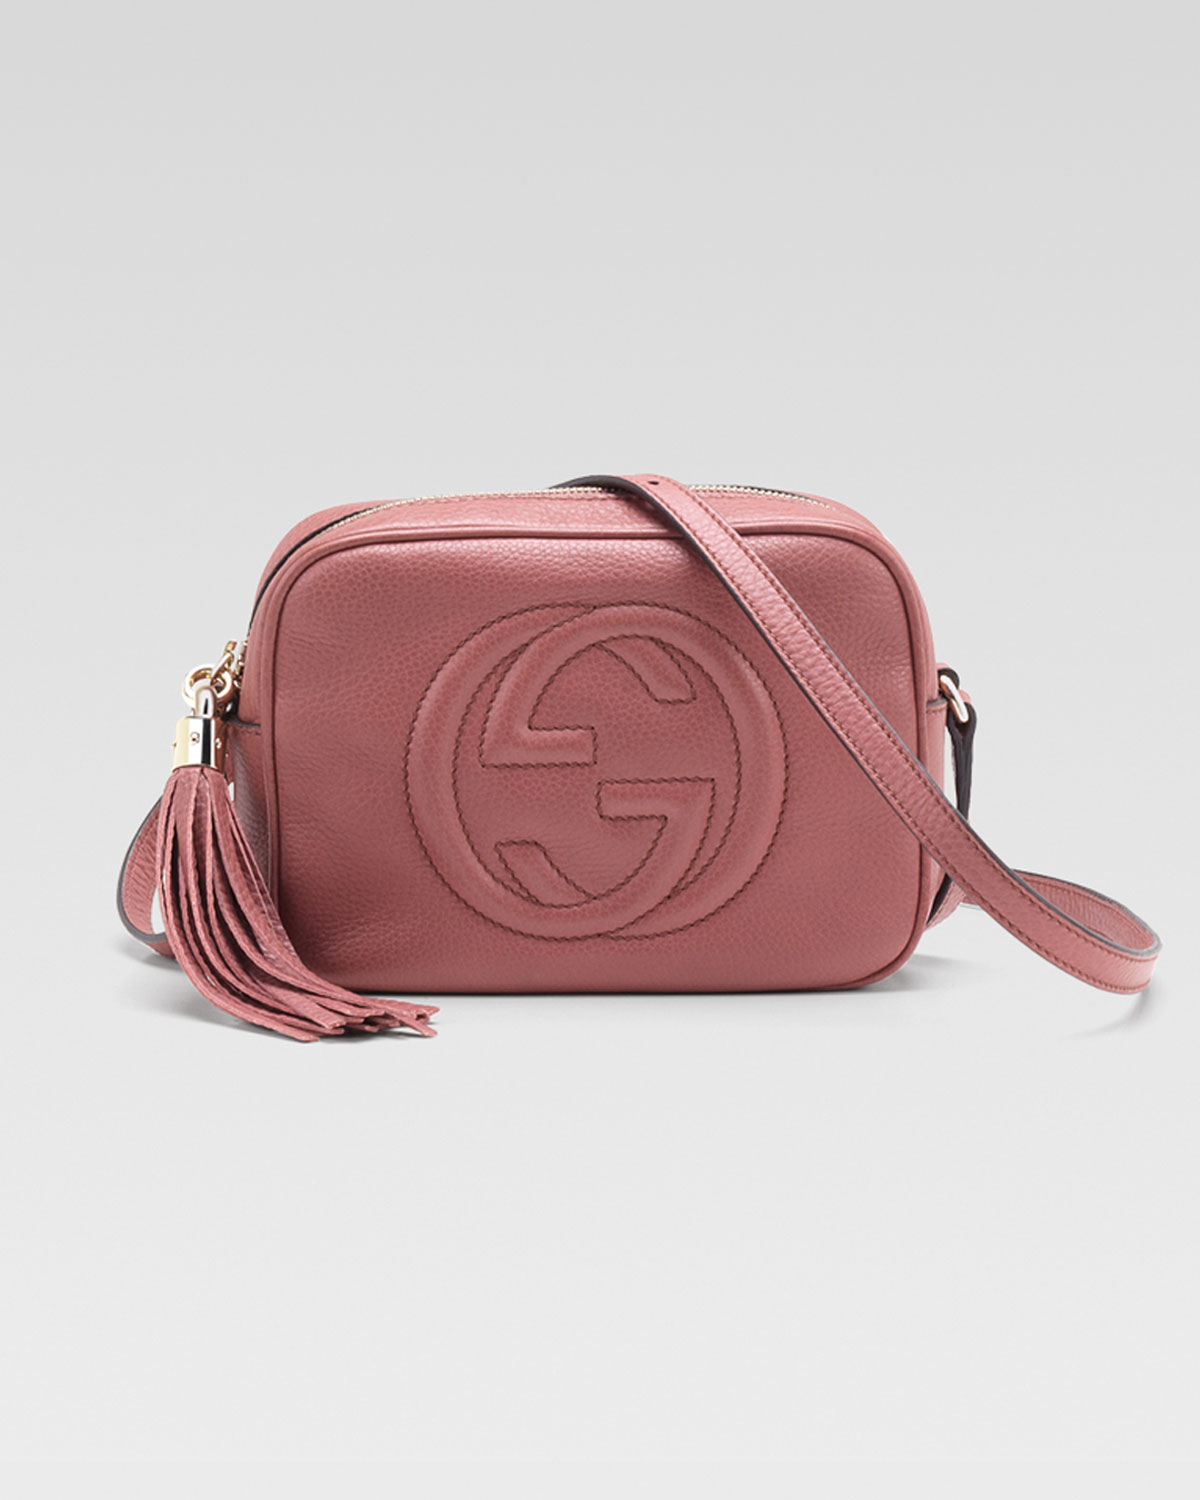 Gucci Soho Dark Pink Leather Disco Bag - Lyst